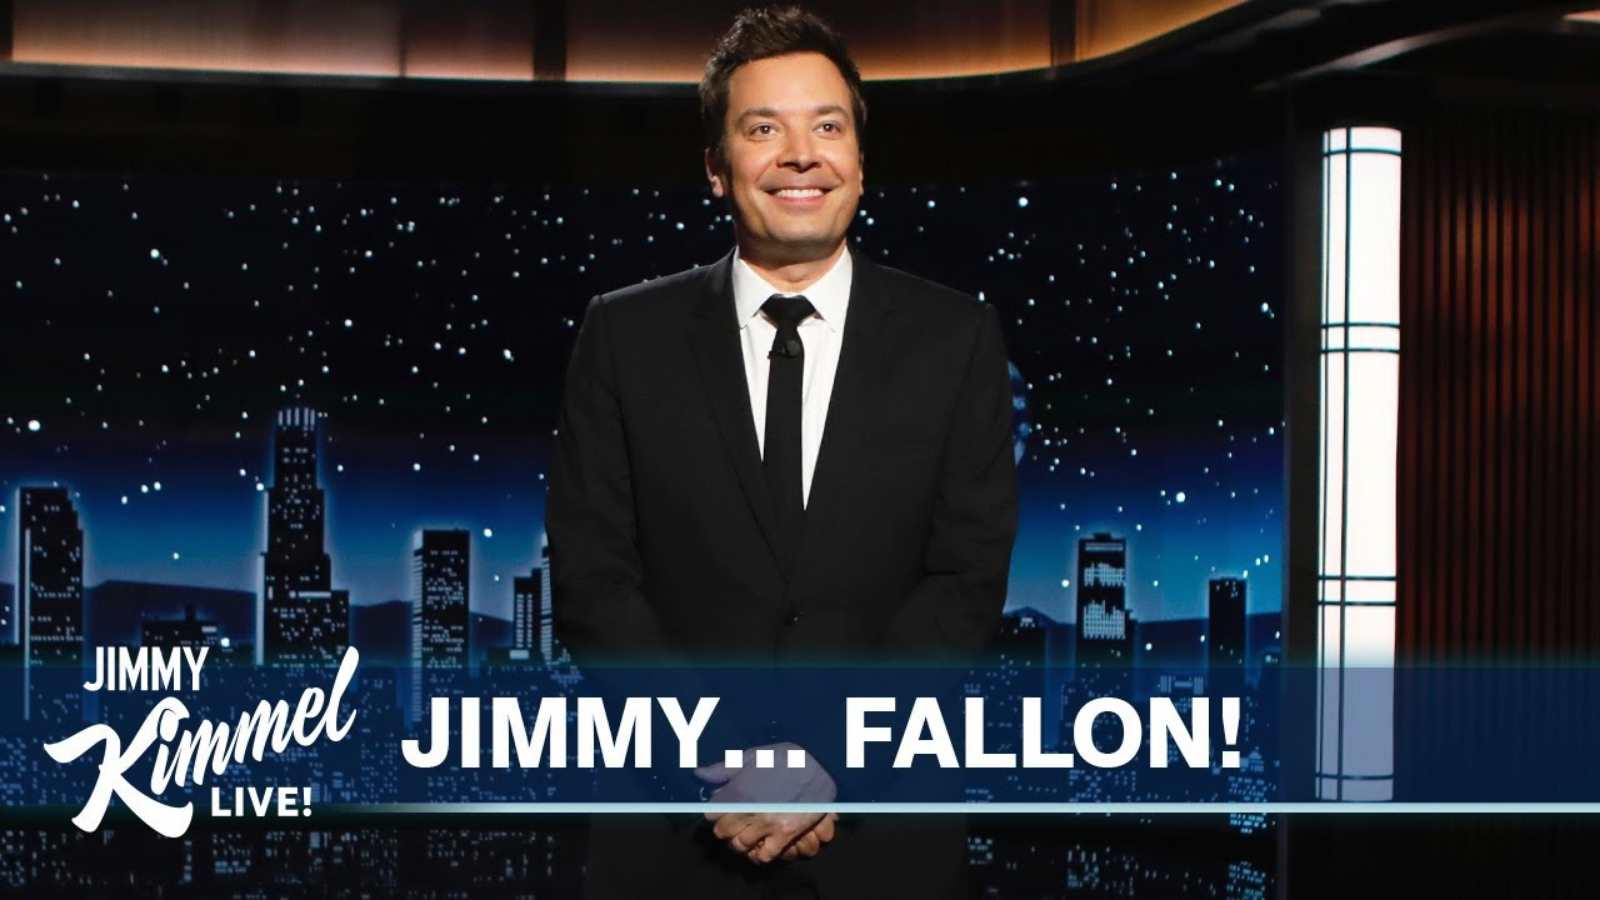 Jimmy Fallon On Jimmy Kimmel Live as Host